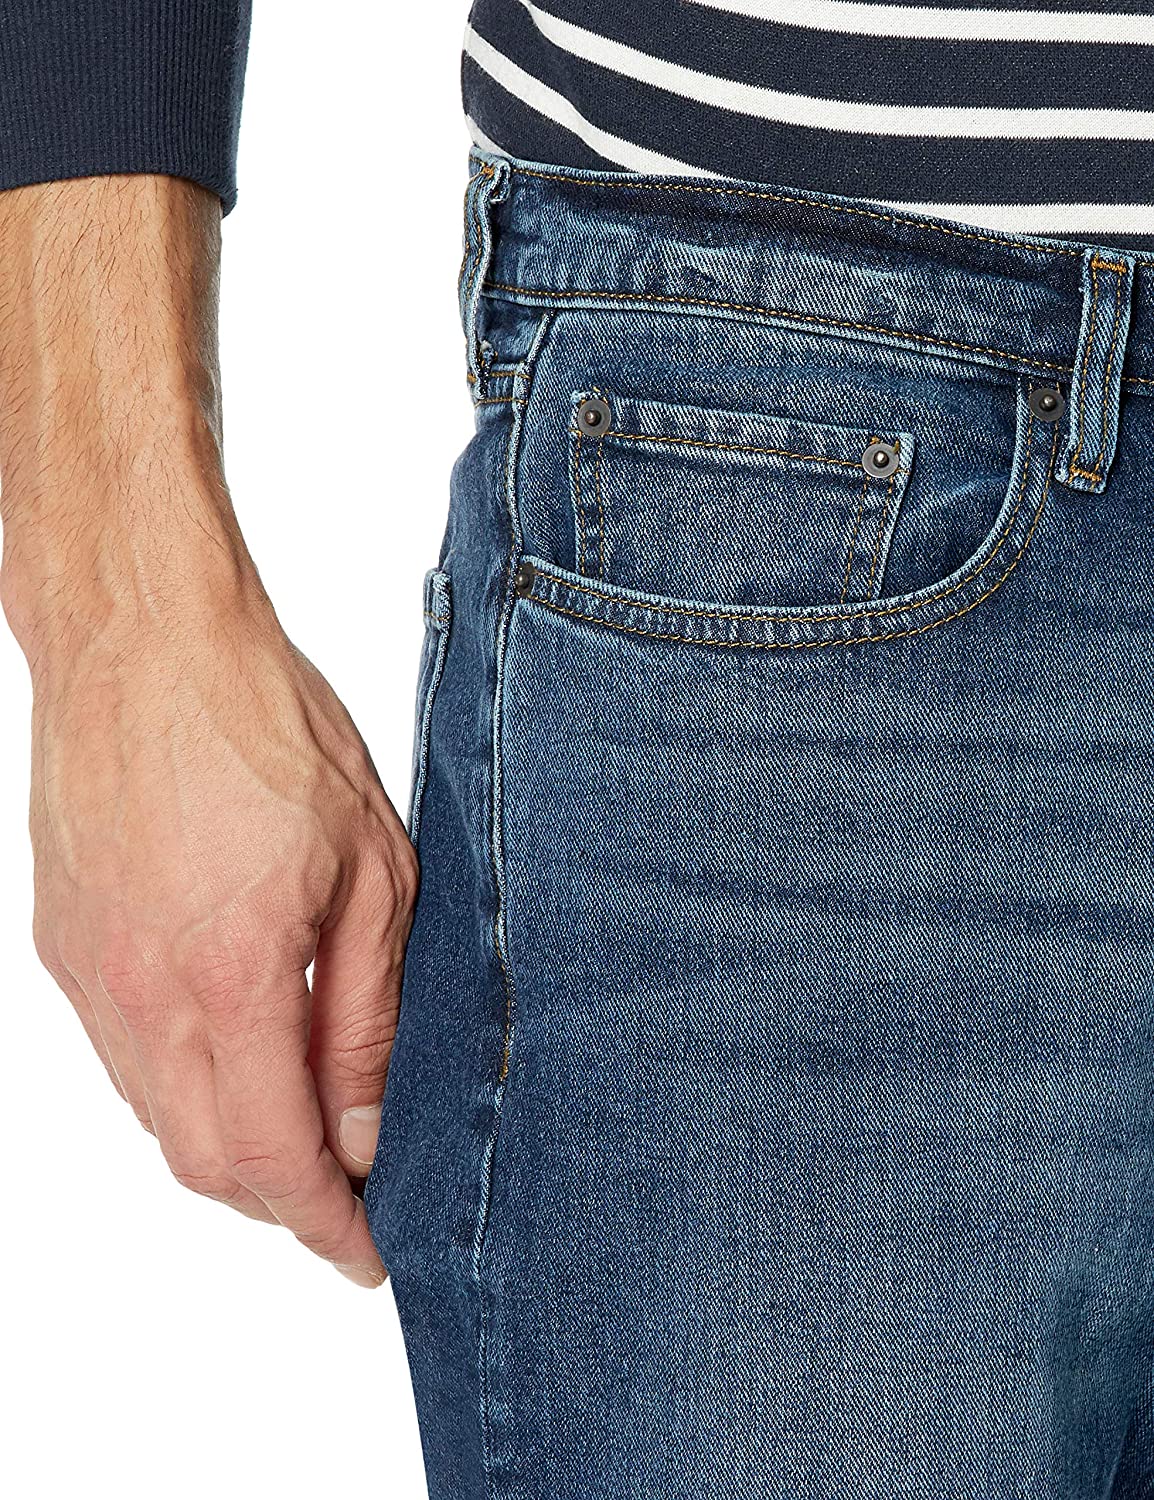 Men's Athletic-Fit Stretch Jean